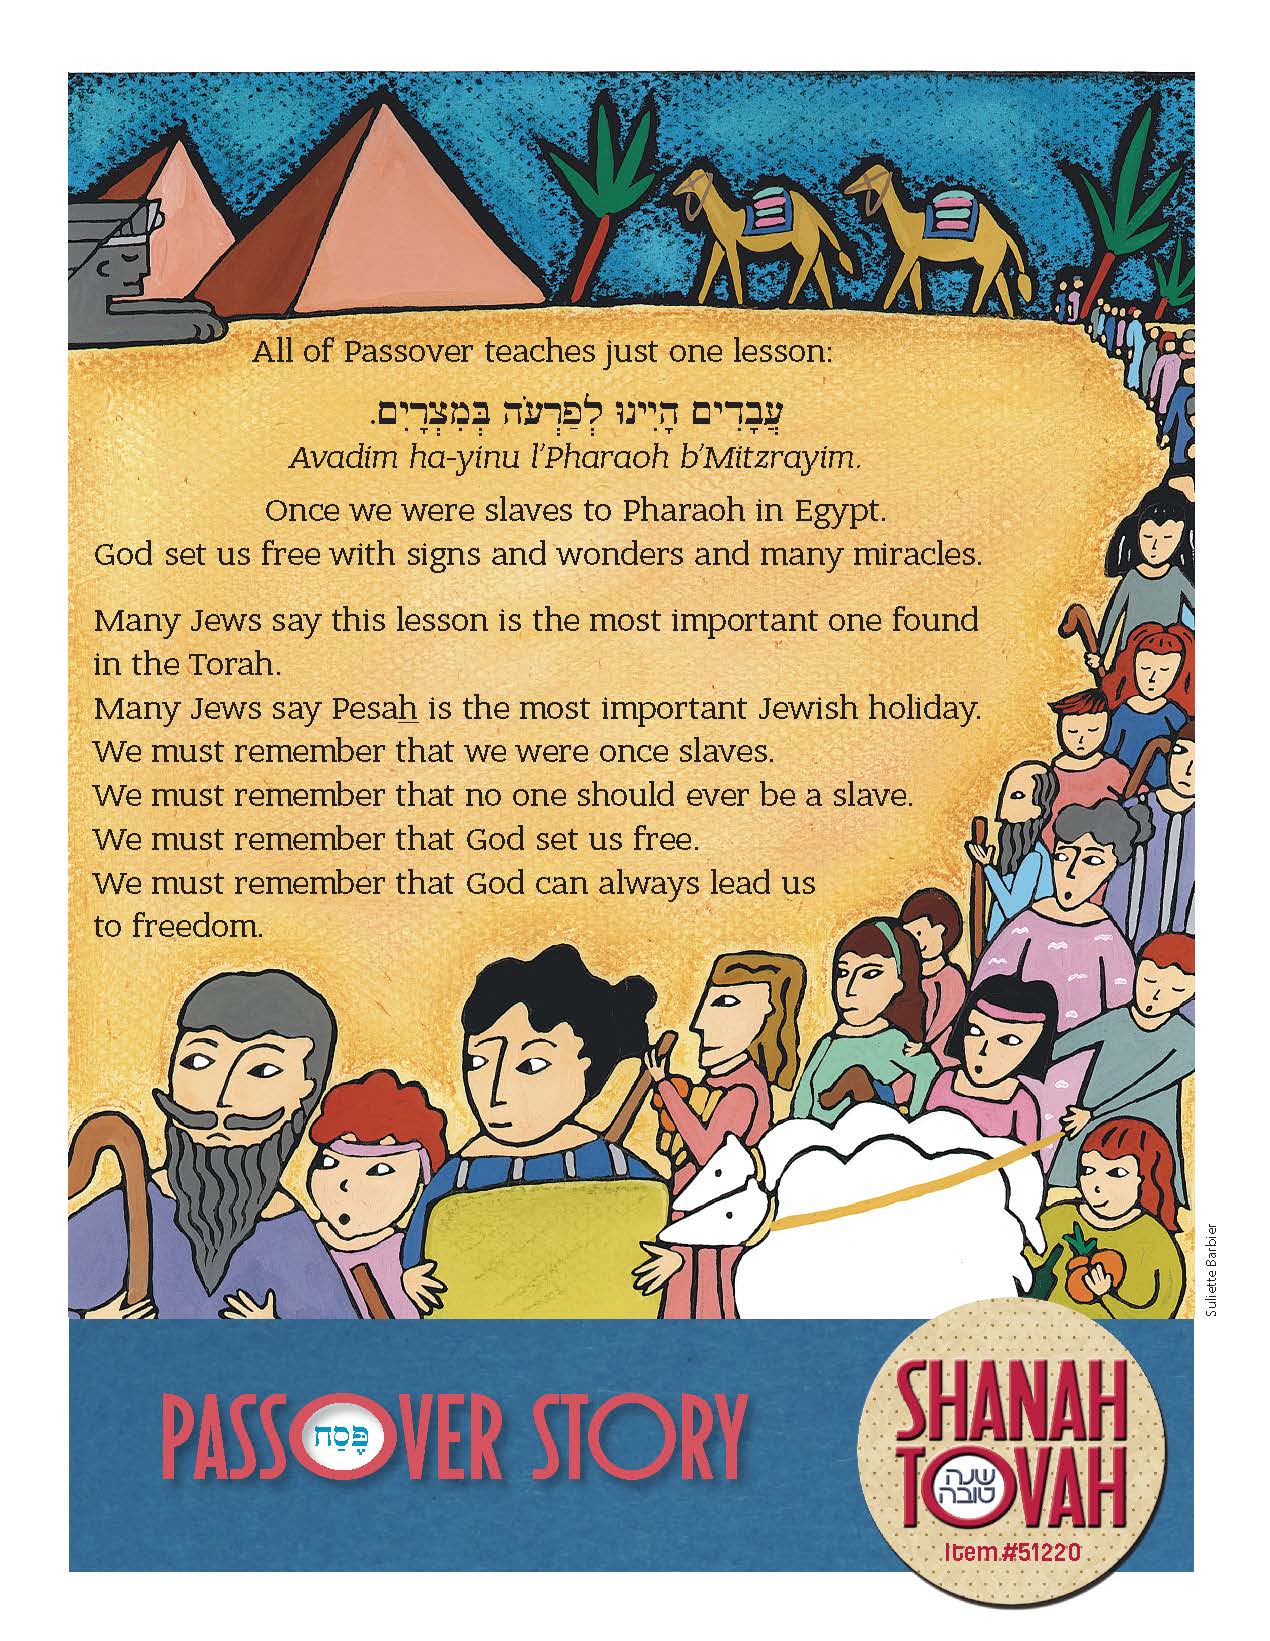 Shanah Tovah: Passover Story